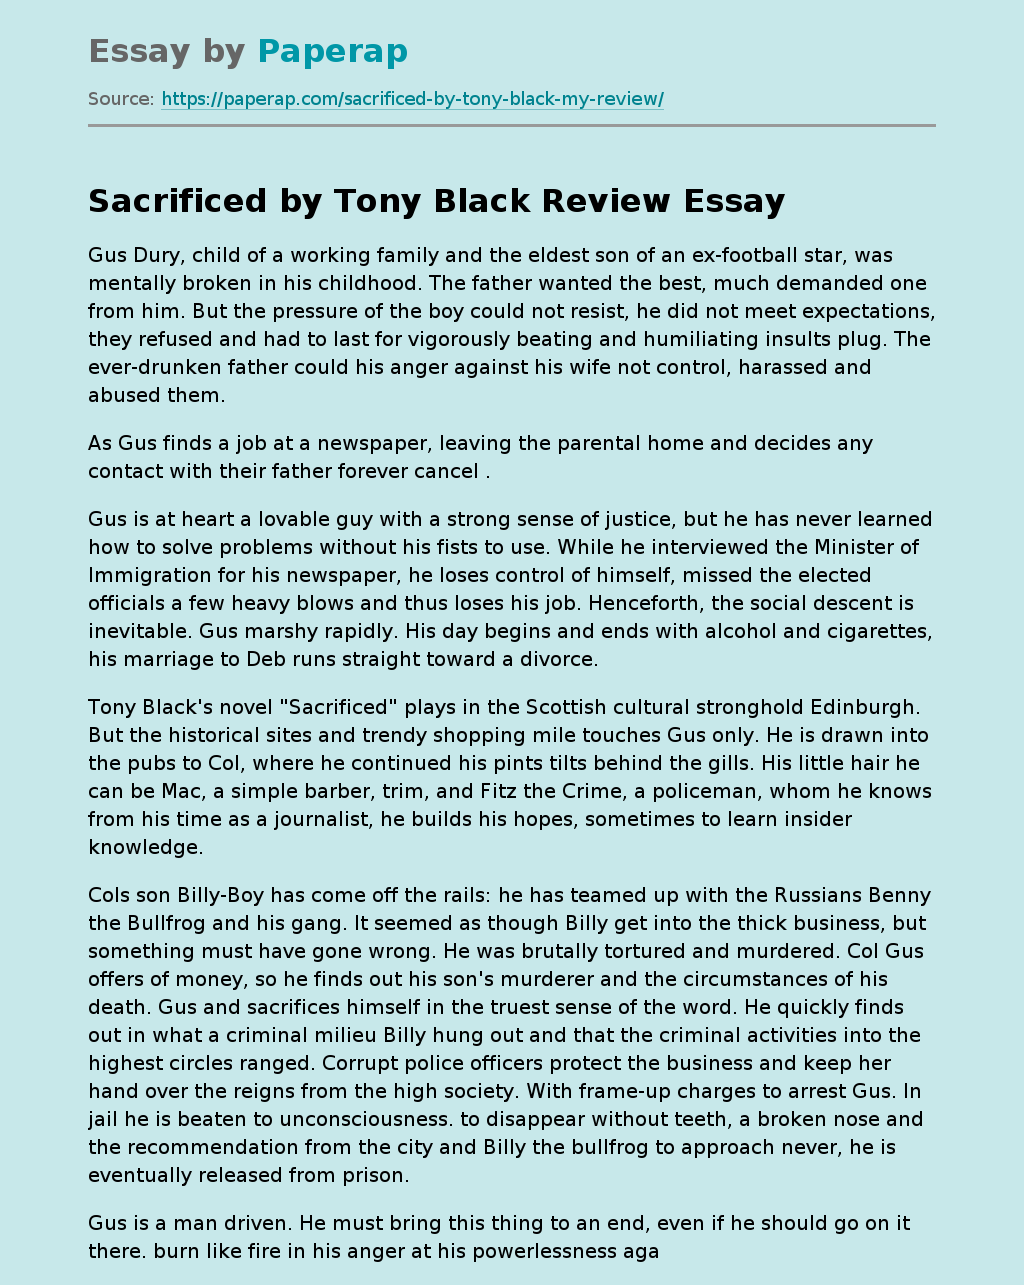 Novel "Sacrificed" by Tony Black